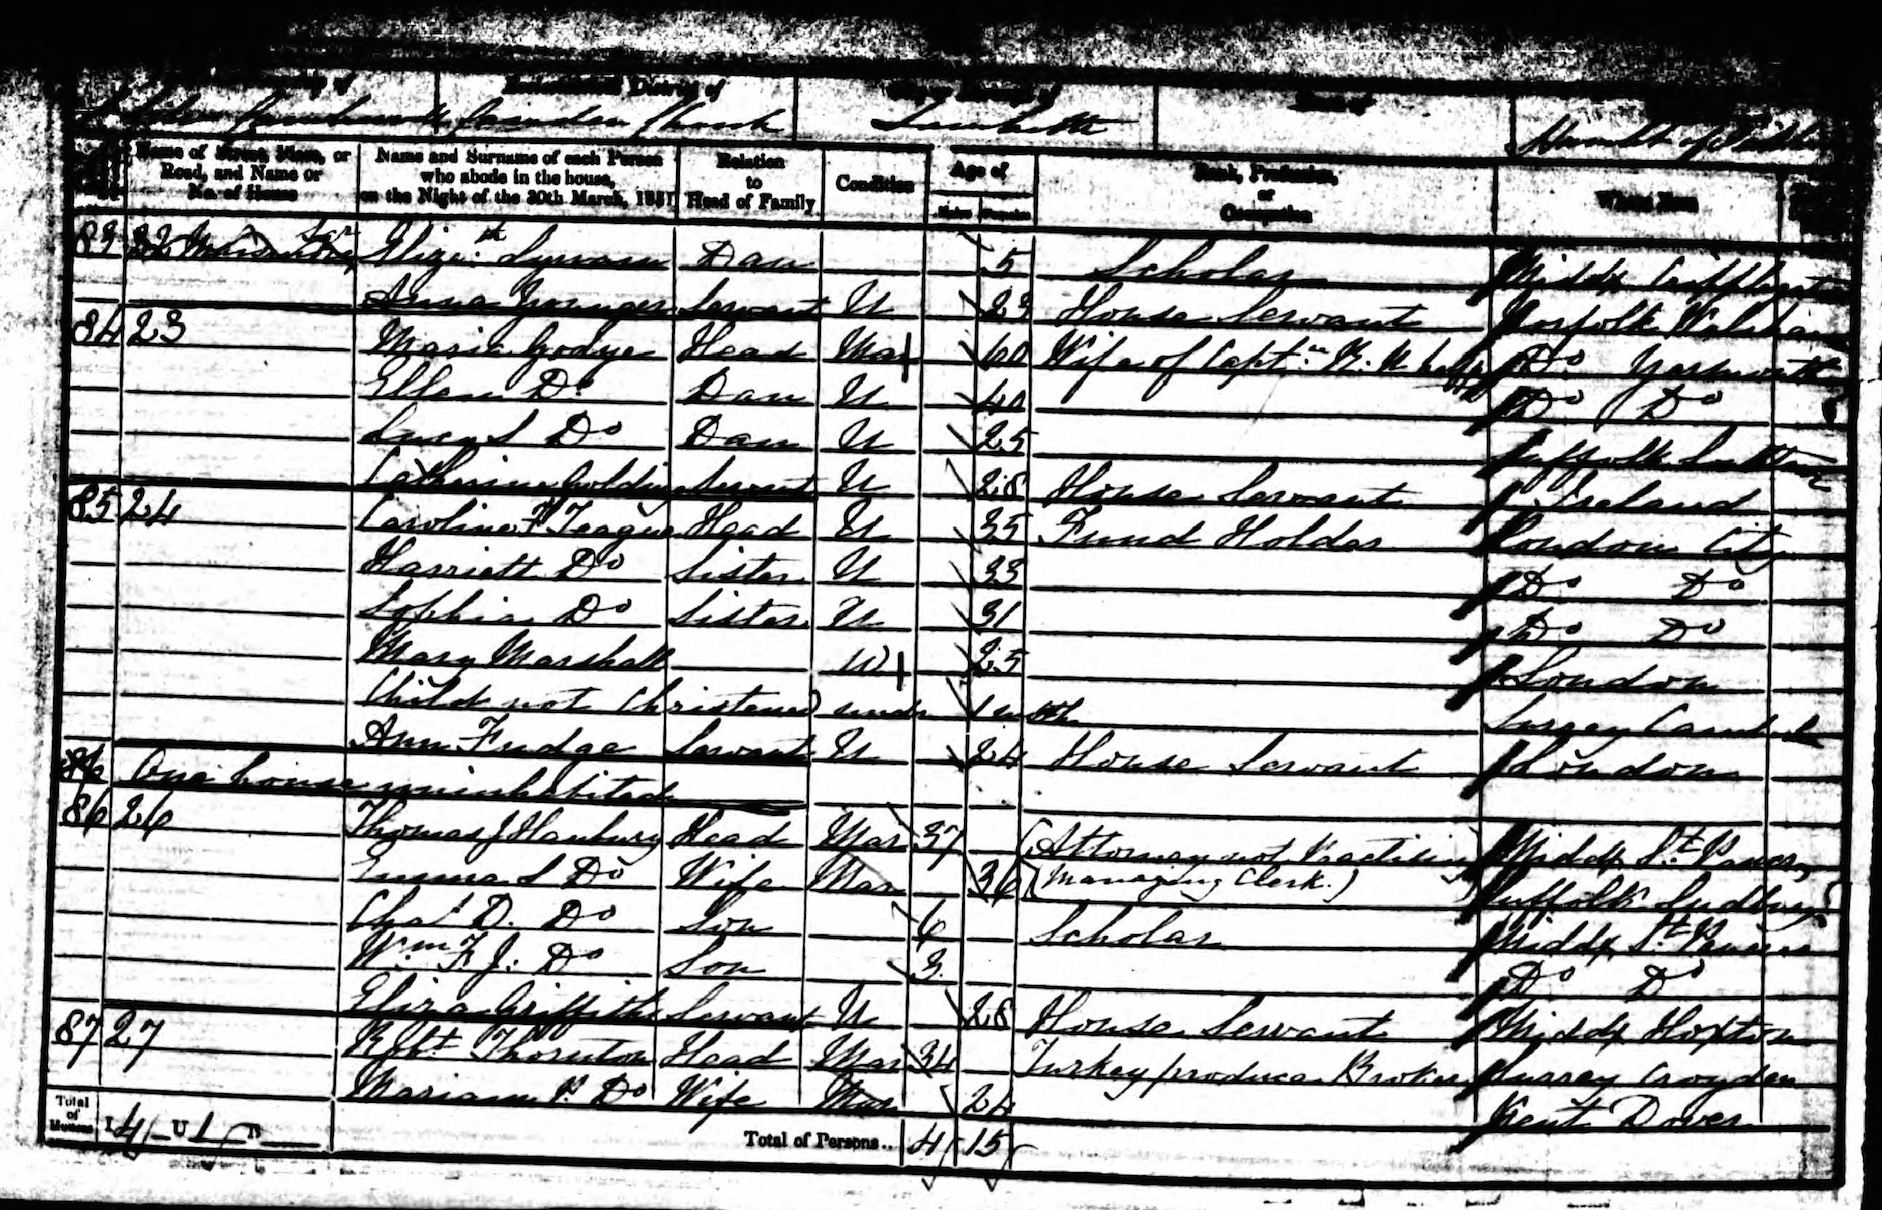 Caroline and Harriet Teague on 1851 census